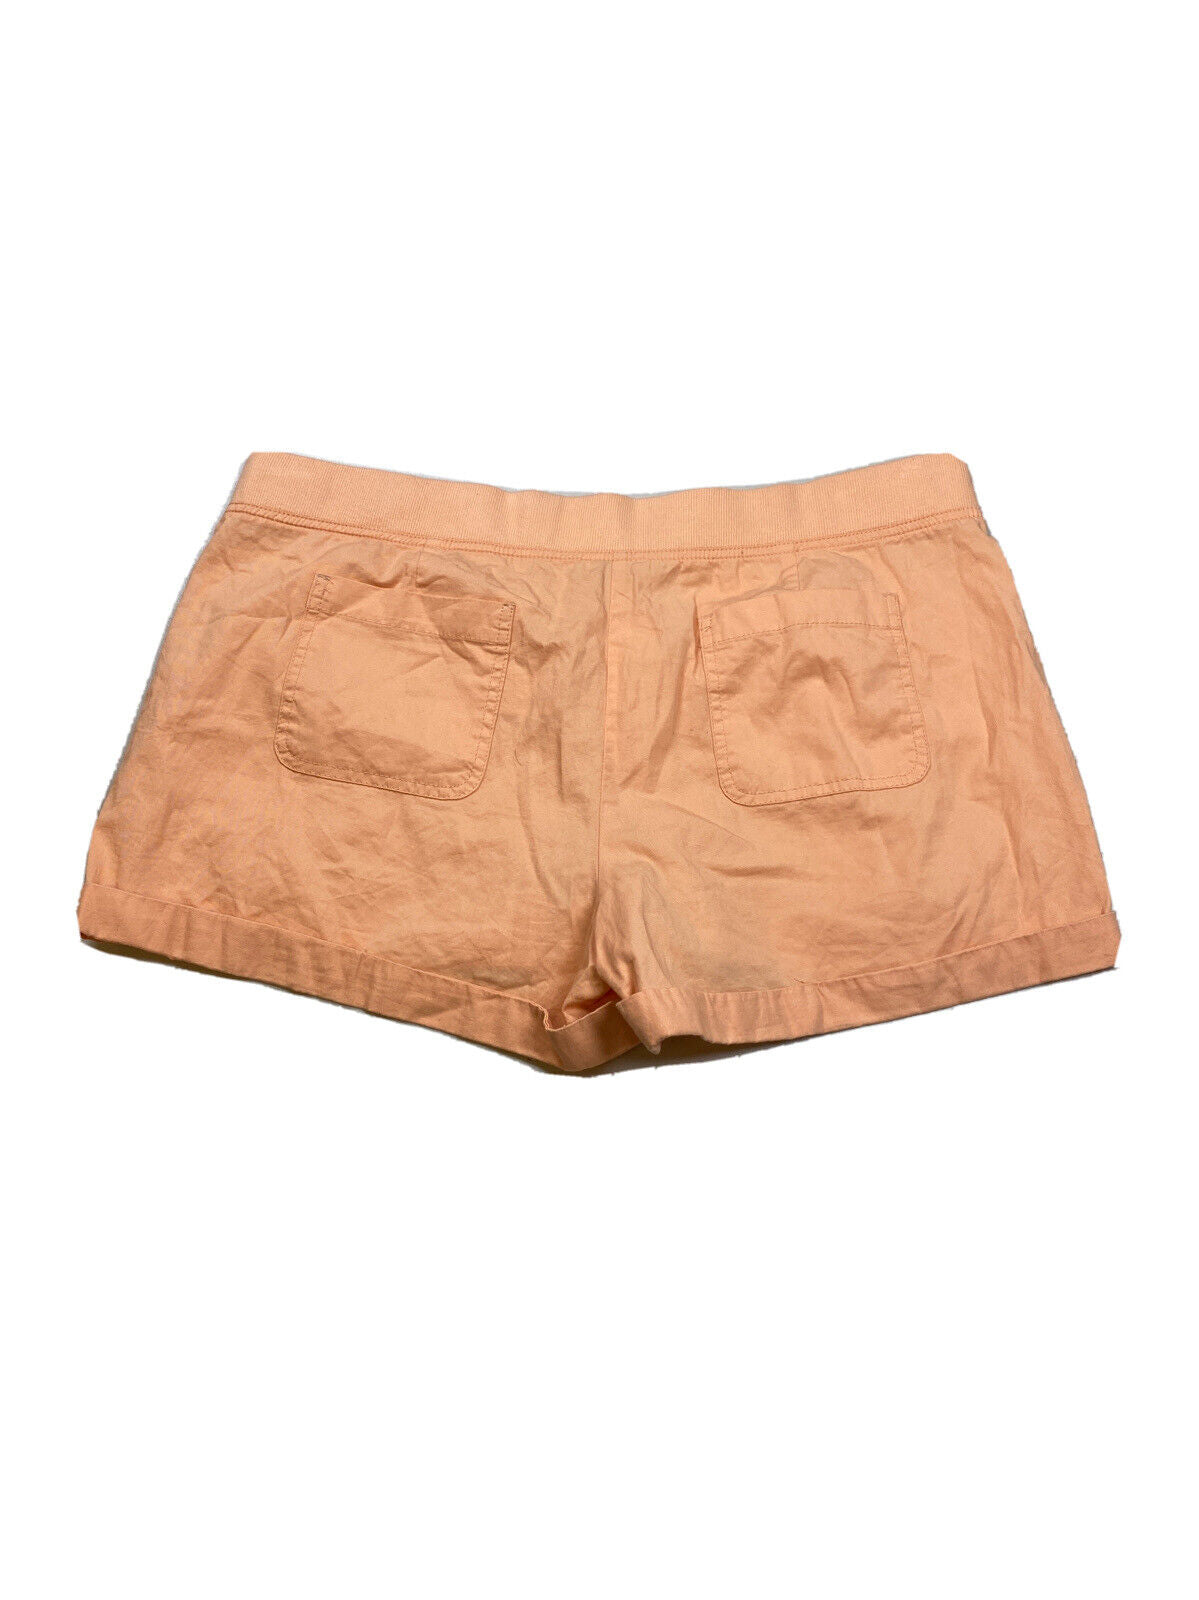 NEW LOFT Pantalones cortos chinos elásticos naranjas para mujer - 14